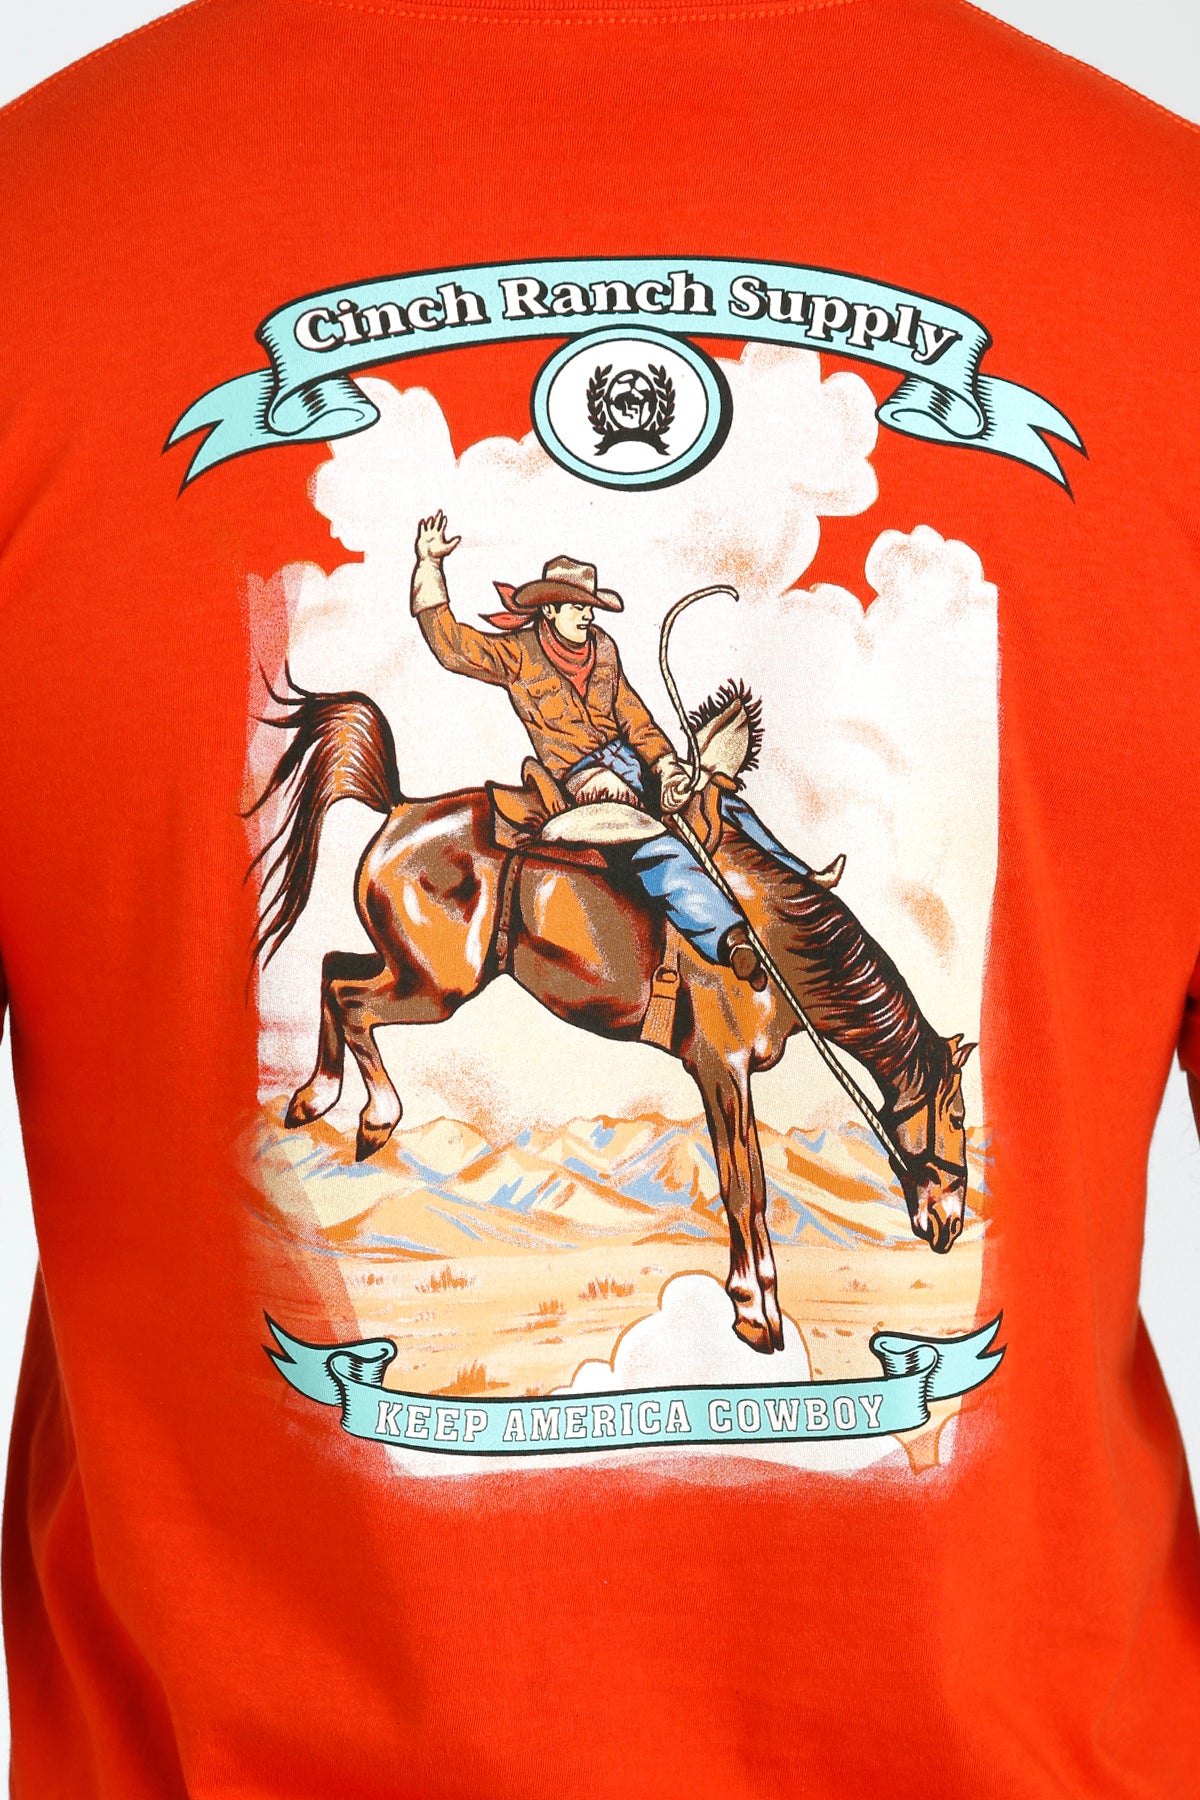 Cinch Men's "Cinch Ranch Supply, Keep America Cowboy" T-shirt